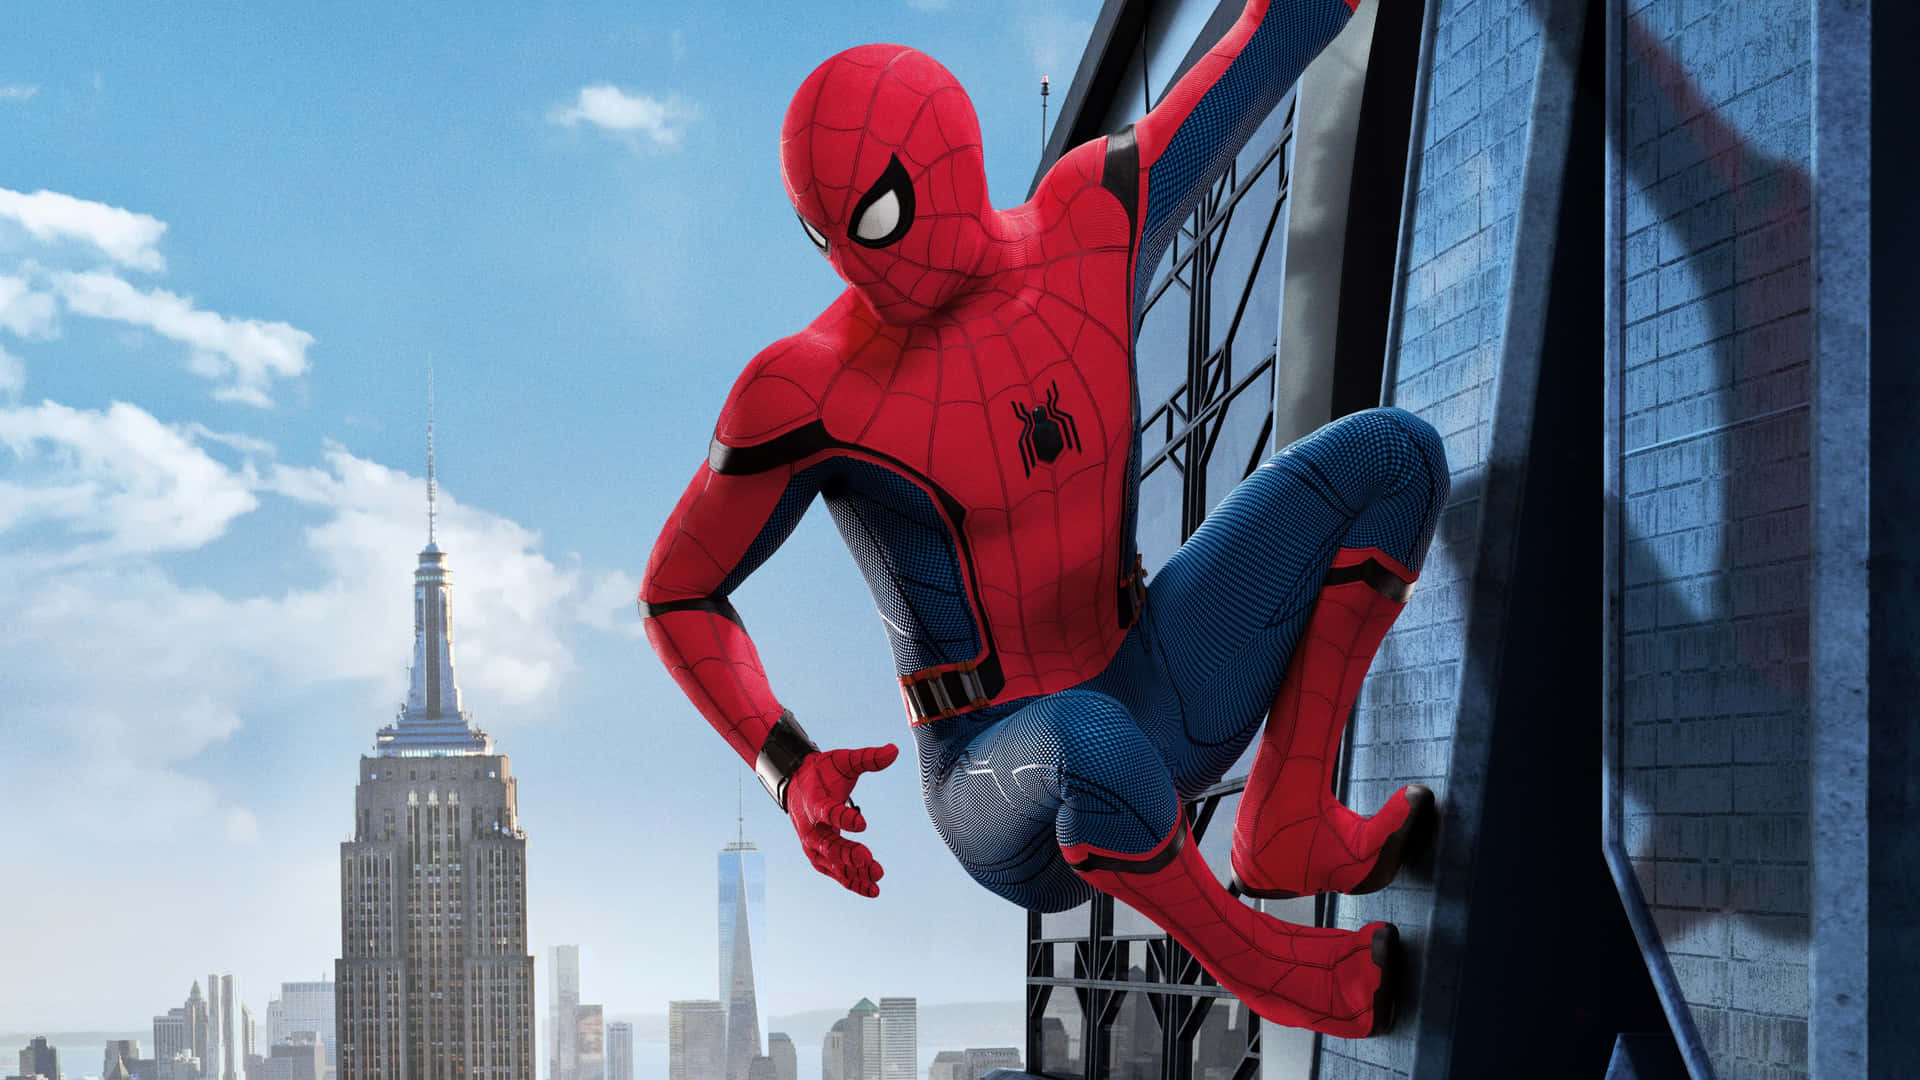 Marvelcomics-superheld Spider-man Computer Wallpaper